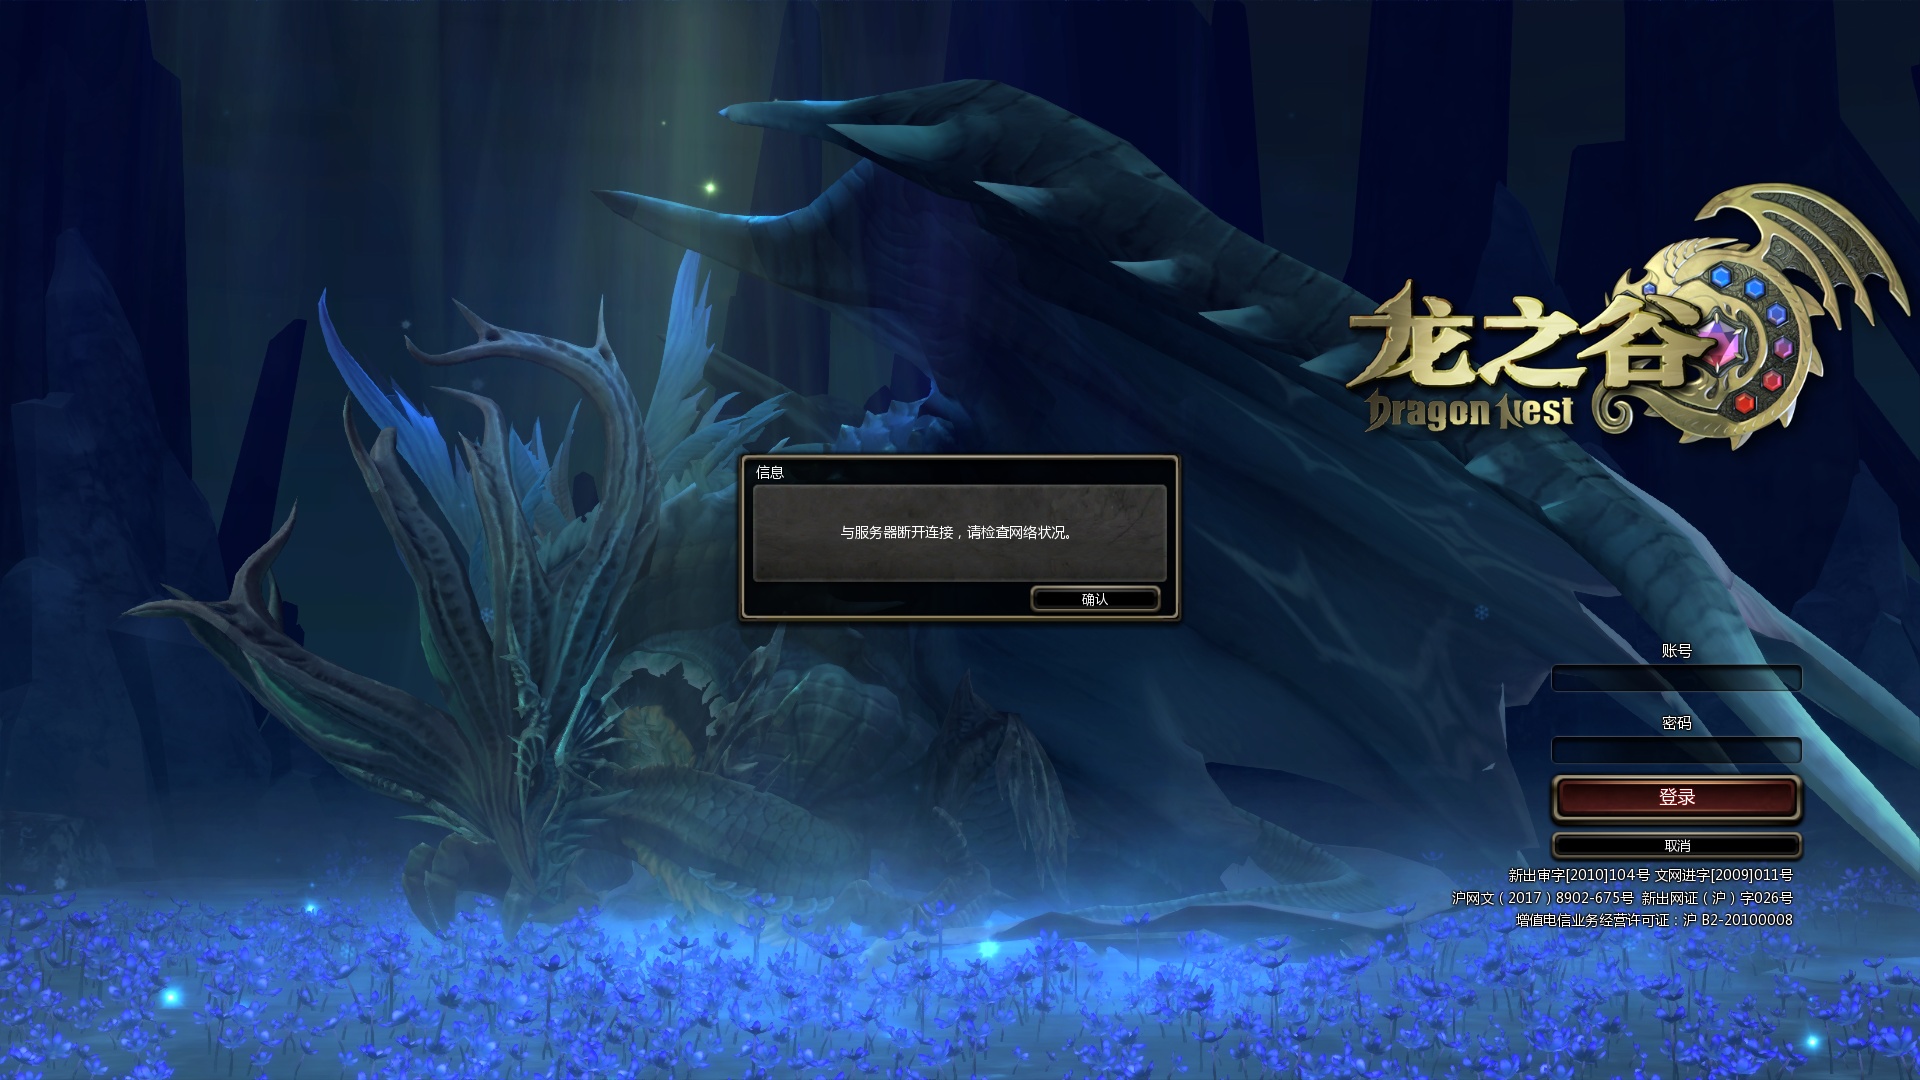 keyrita1 - Dragon Nest Releases 520 - RaGEZONE Forums